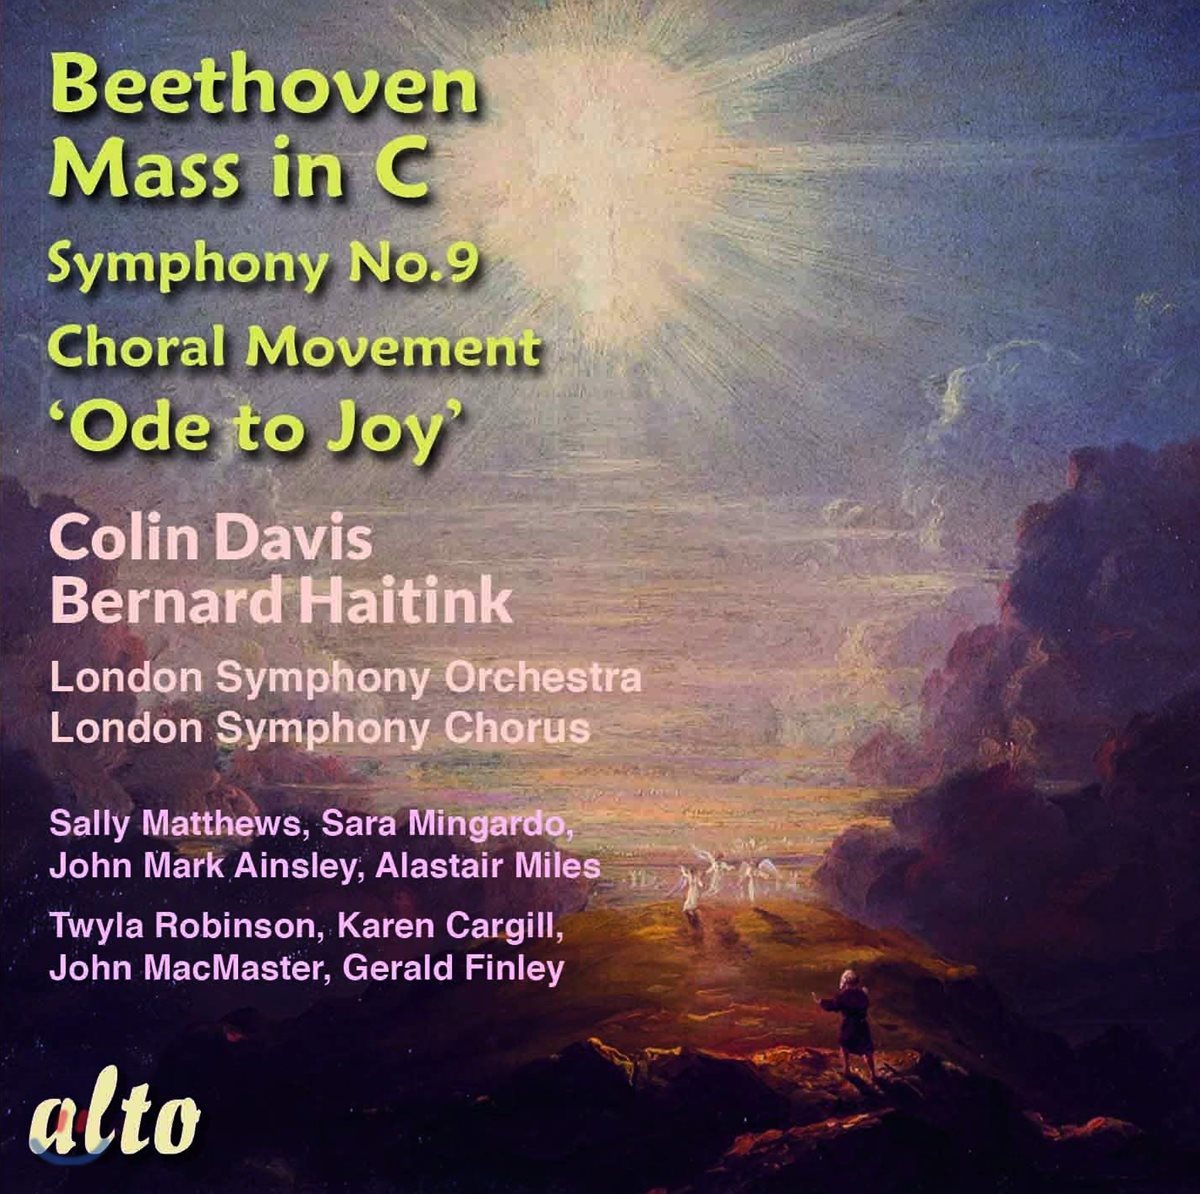 Colin Davis / Bernard Haitink 베토벤: 미사 C, 교향곡 9번 4악장 &#39;환희의 송가&#39; (Beethoven: Mass in C, Symphony No. 9 ‘Ode to Joy’)